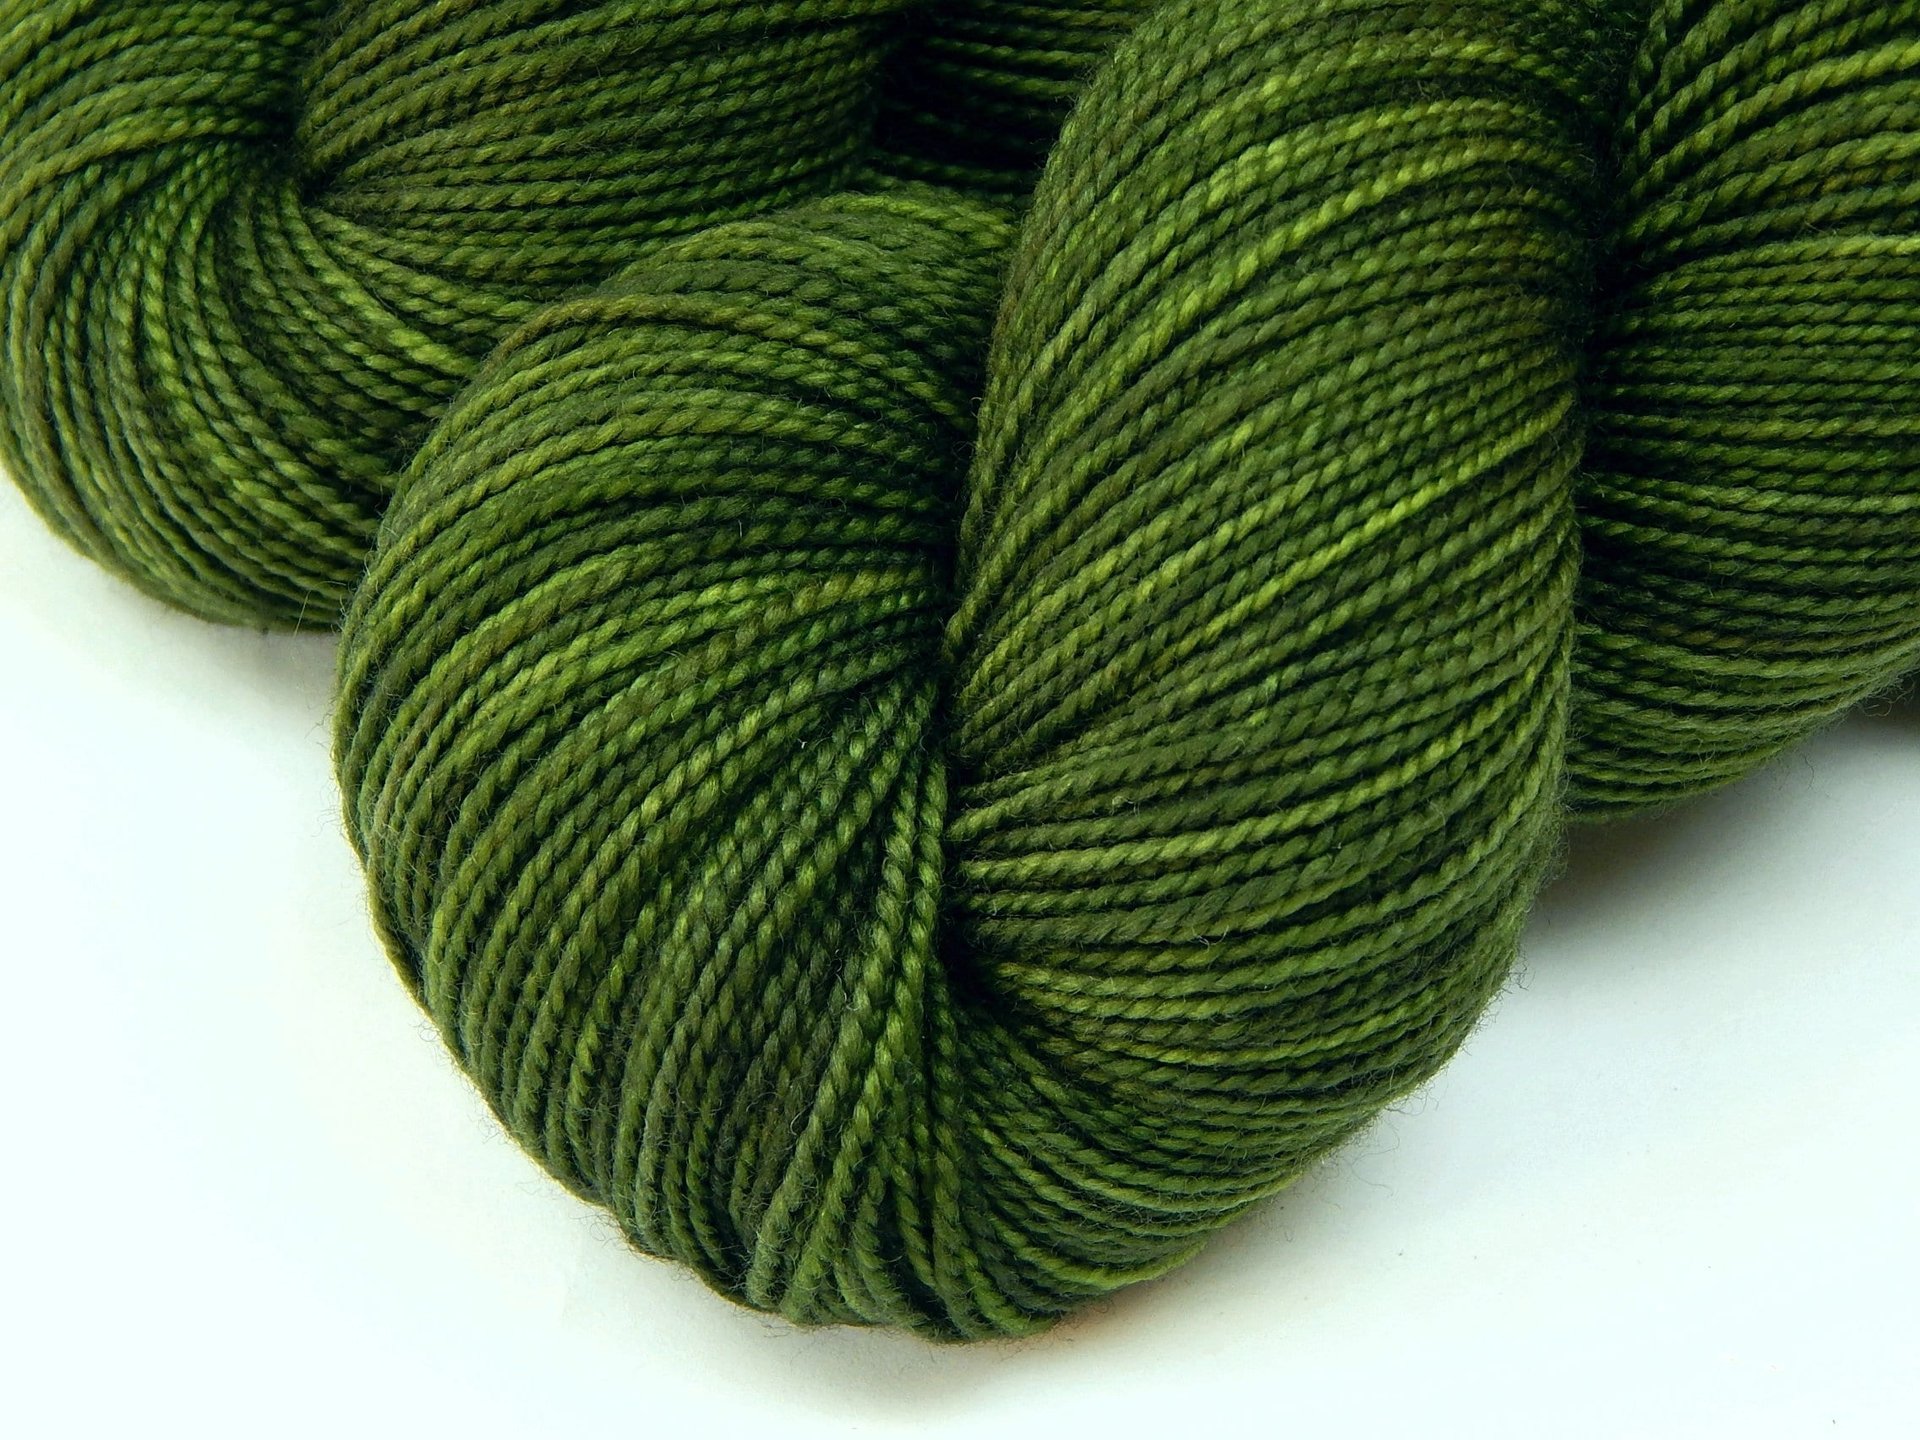 Hand Dyed Sock Yarn, Fingering Weight Superwash Merino Wool Yarn - Moss Tonal - Olive Green Knitting Weaving Yarn, Indie Hand Dyed Yarn